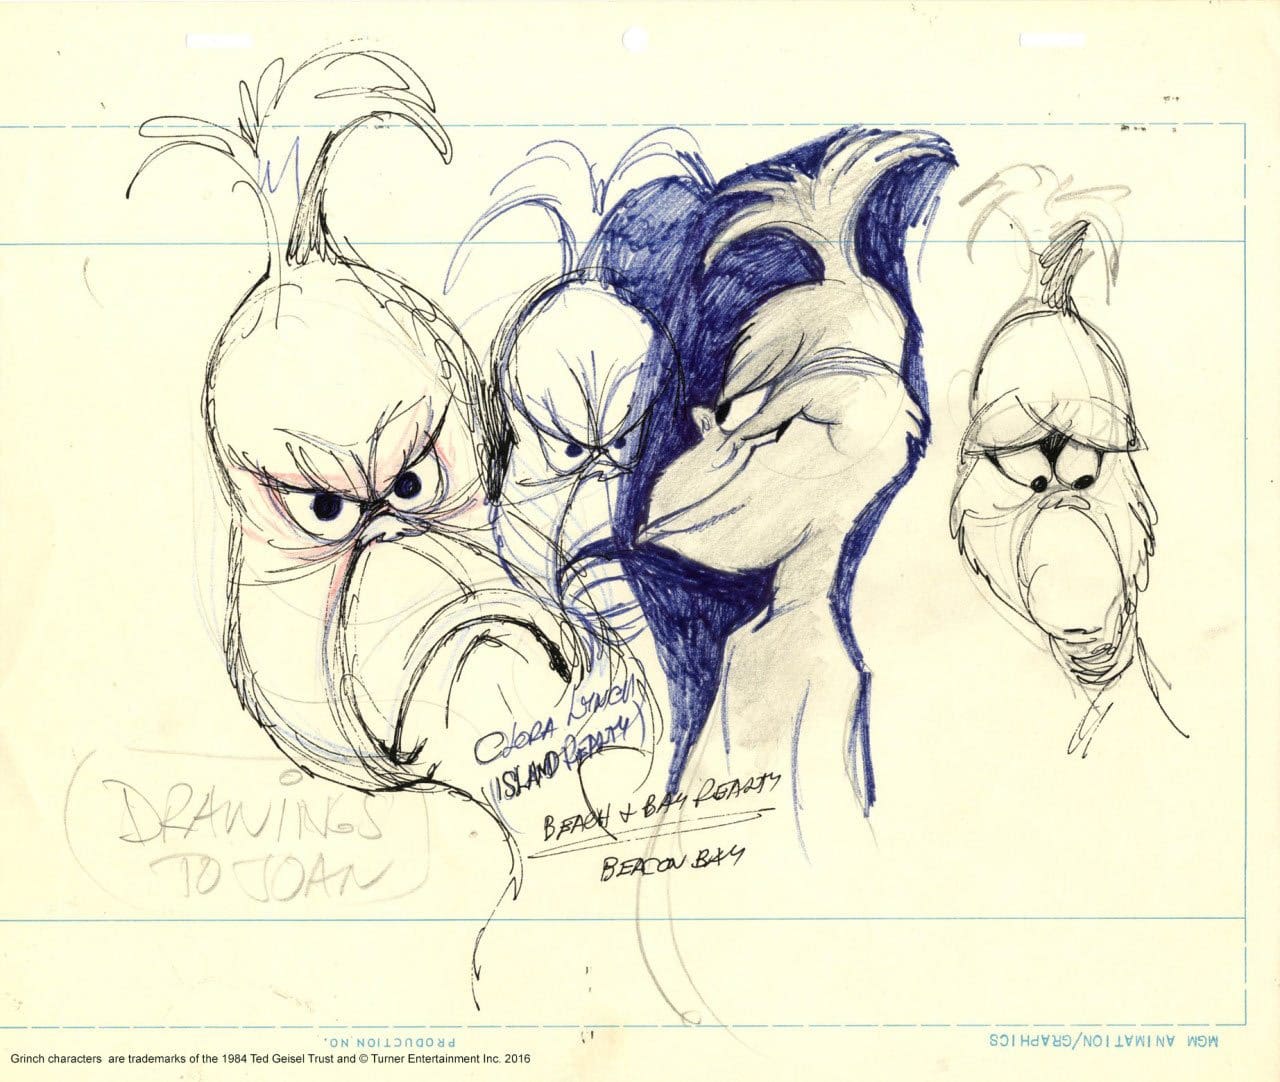 Grinch practice drawing by Chuck Jones.